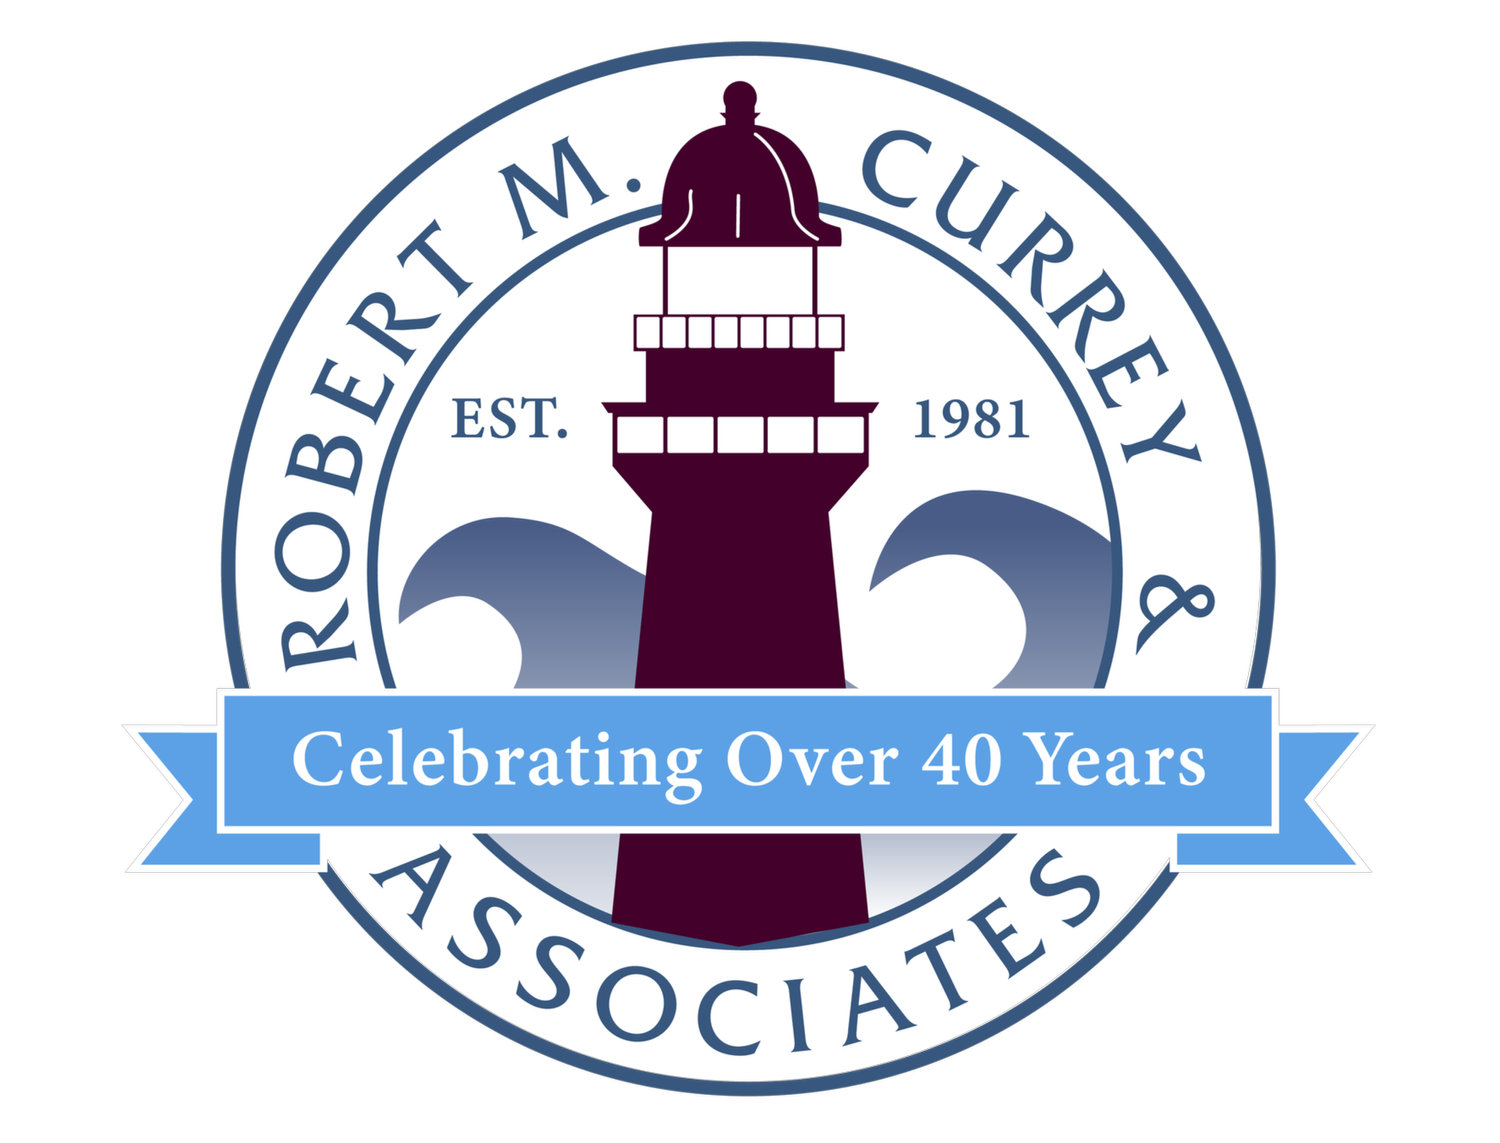 Robert M. Currey & Associates